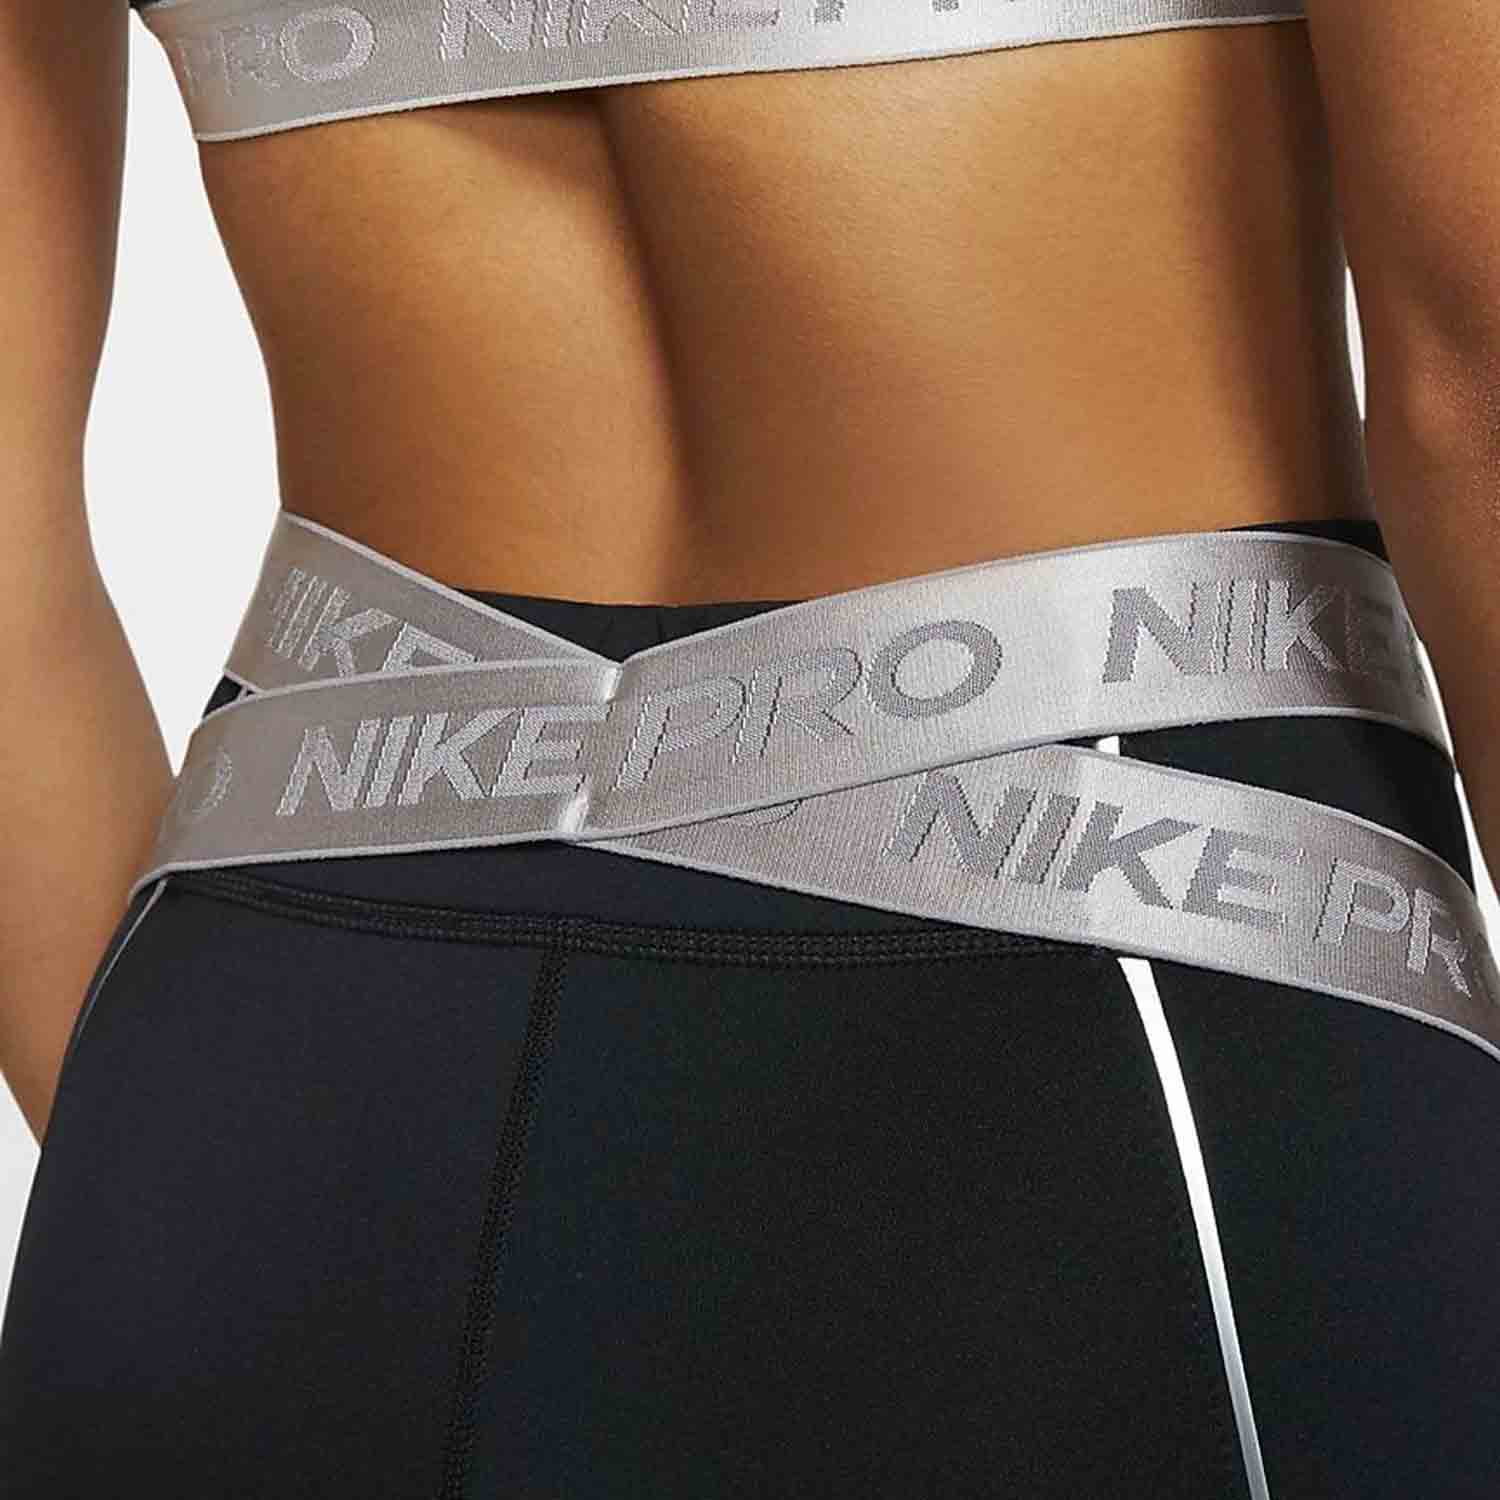 Nike Pro Hyperwarm Women's 2 in 1 Built in Shorts Running Training Gym  Tights 